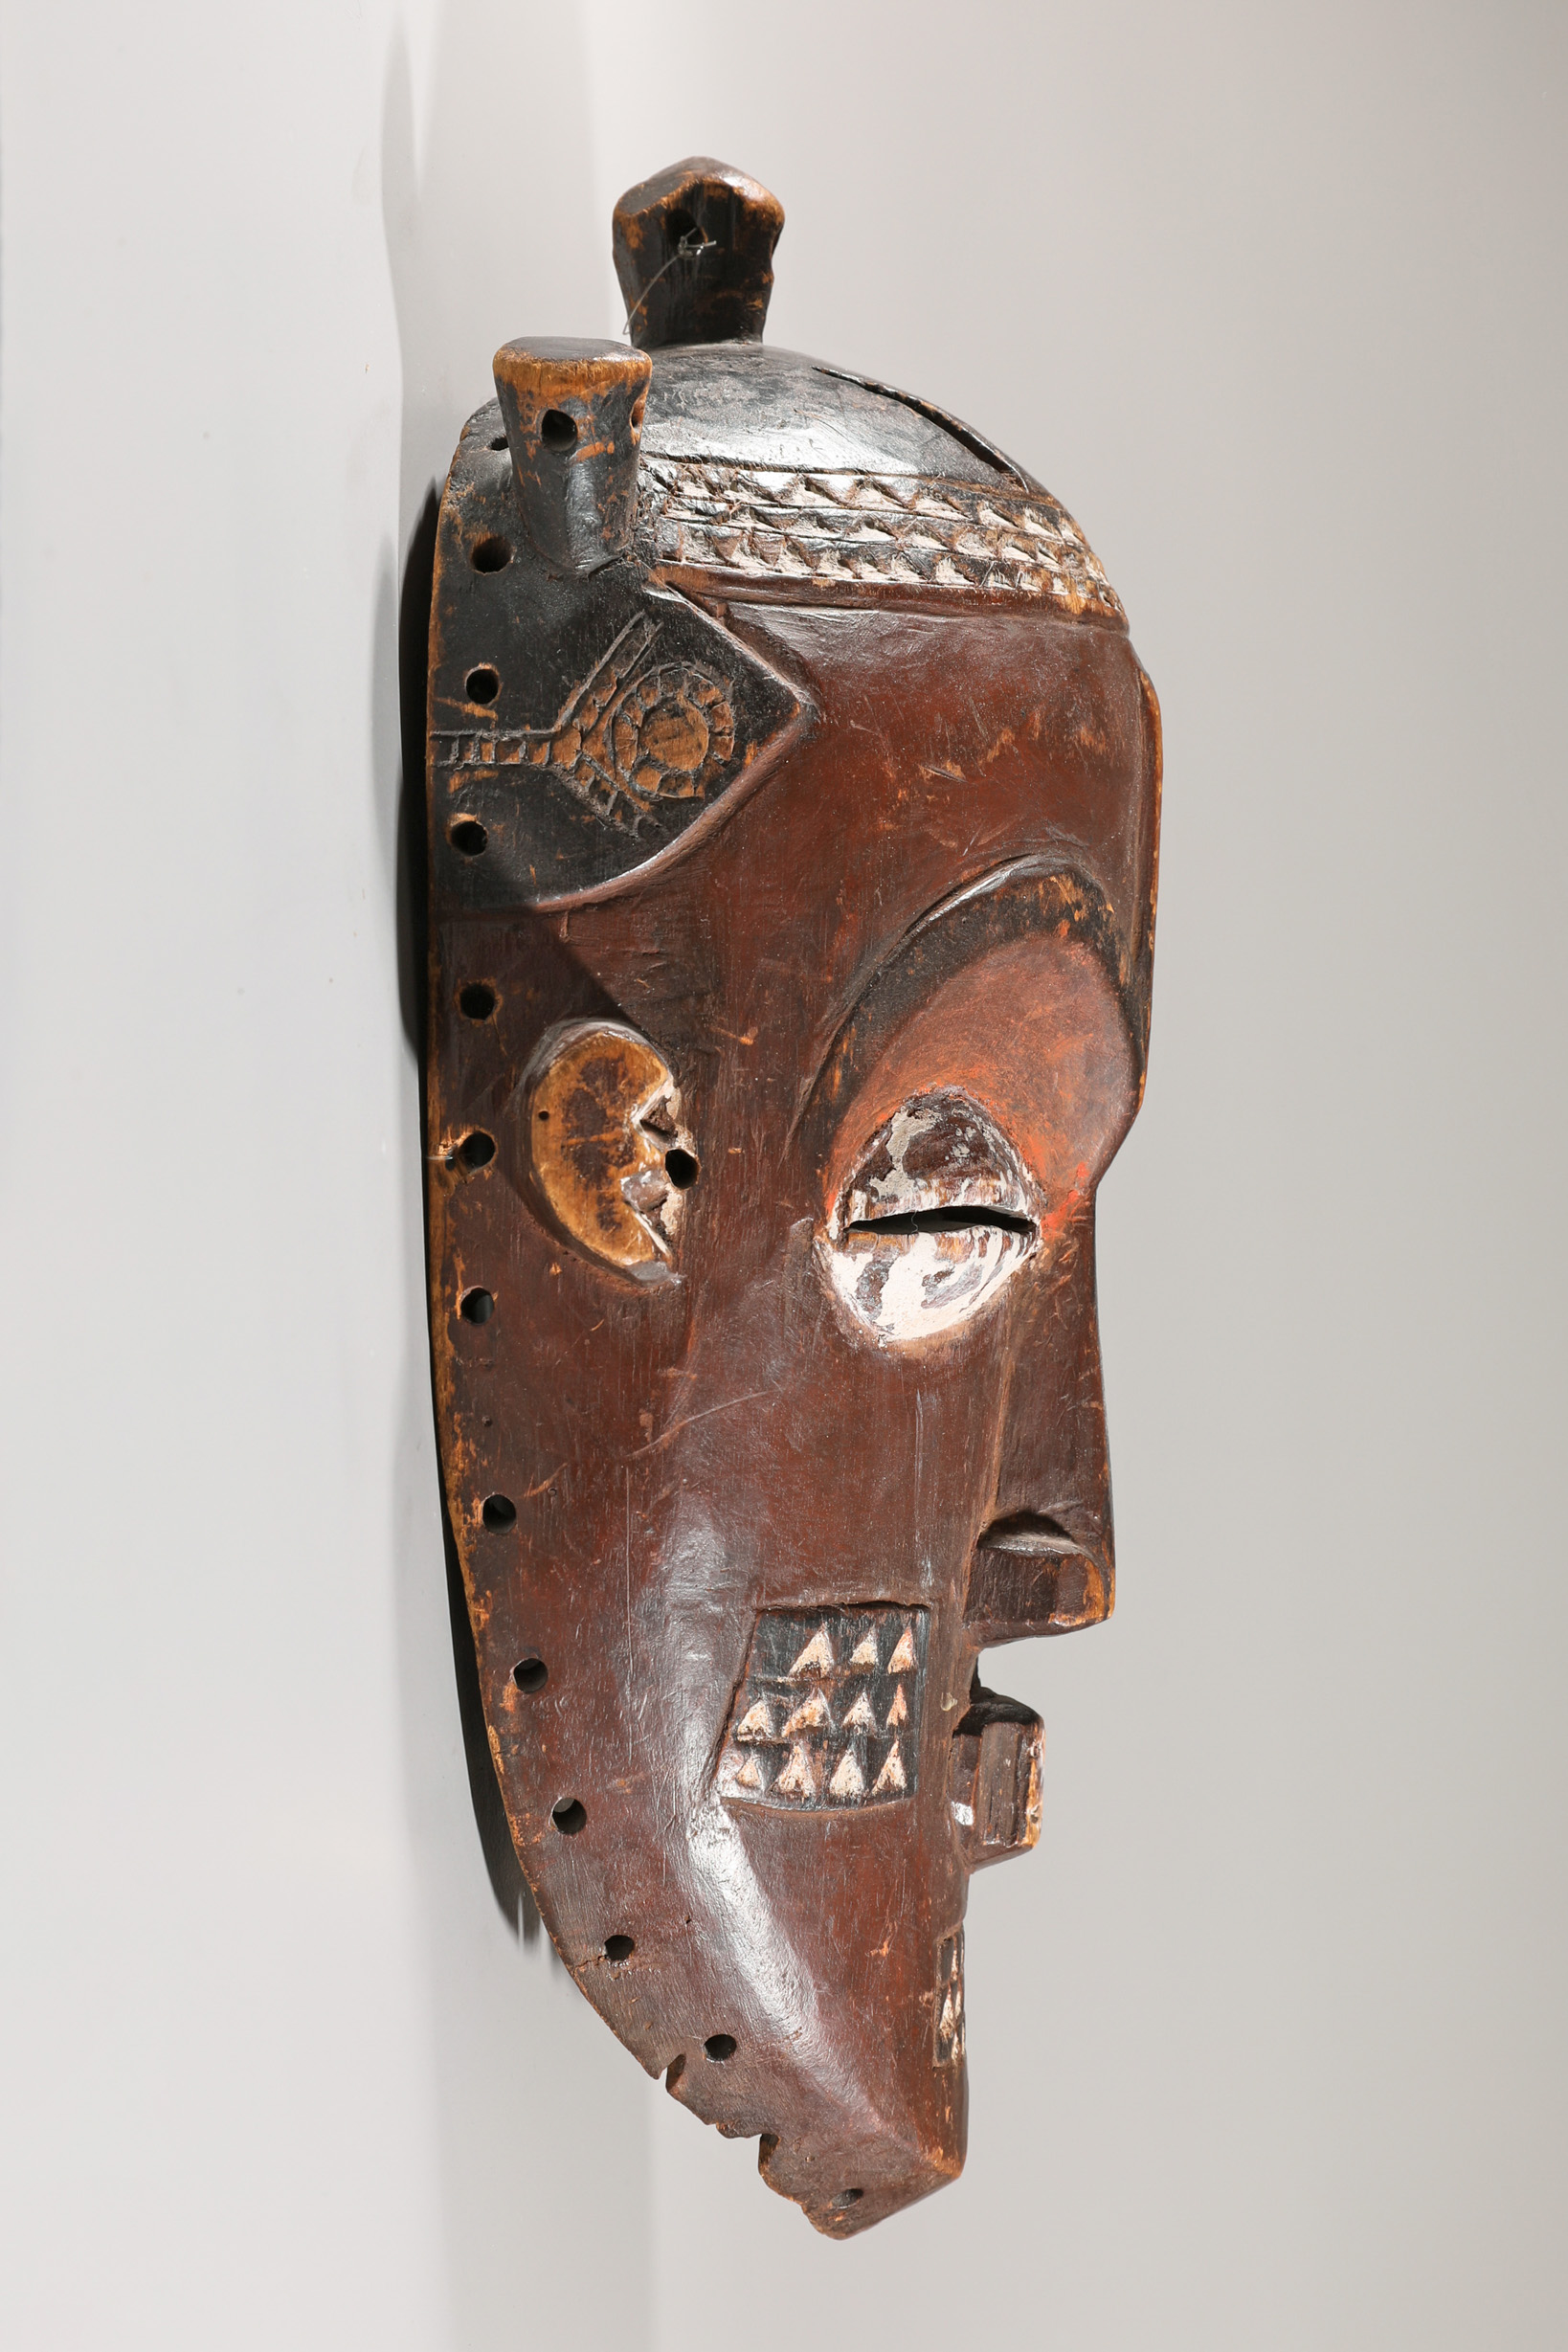 Male face mask, Biombo, Congo - Image 2 of 3